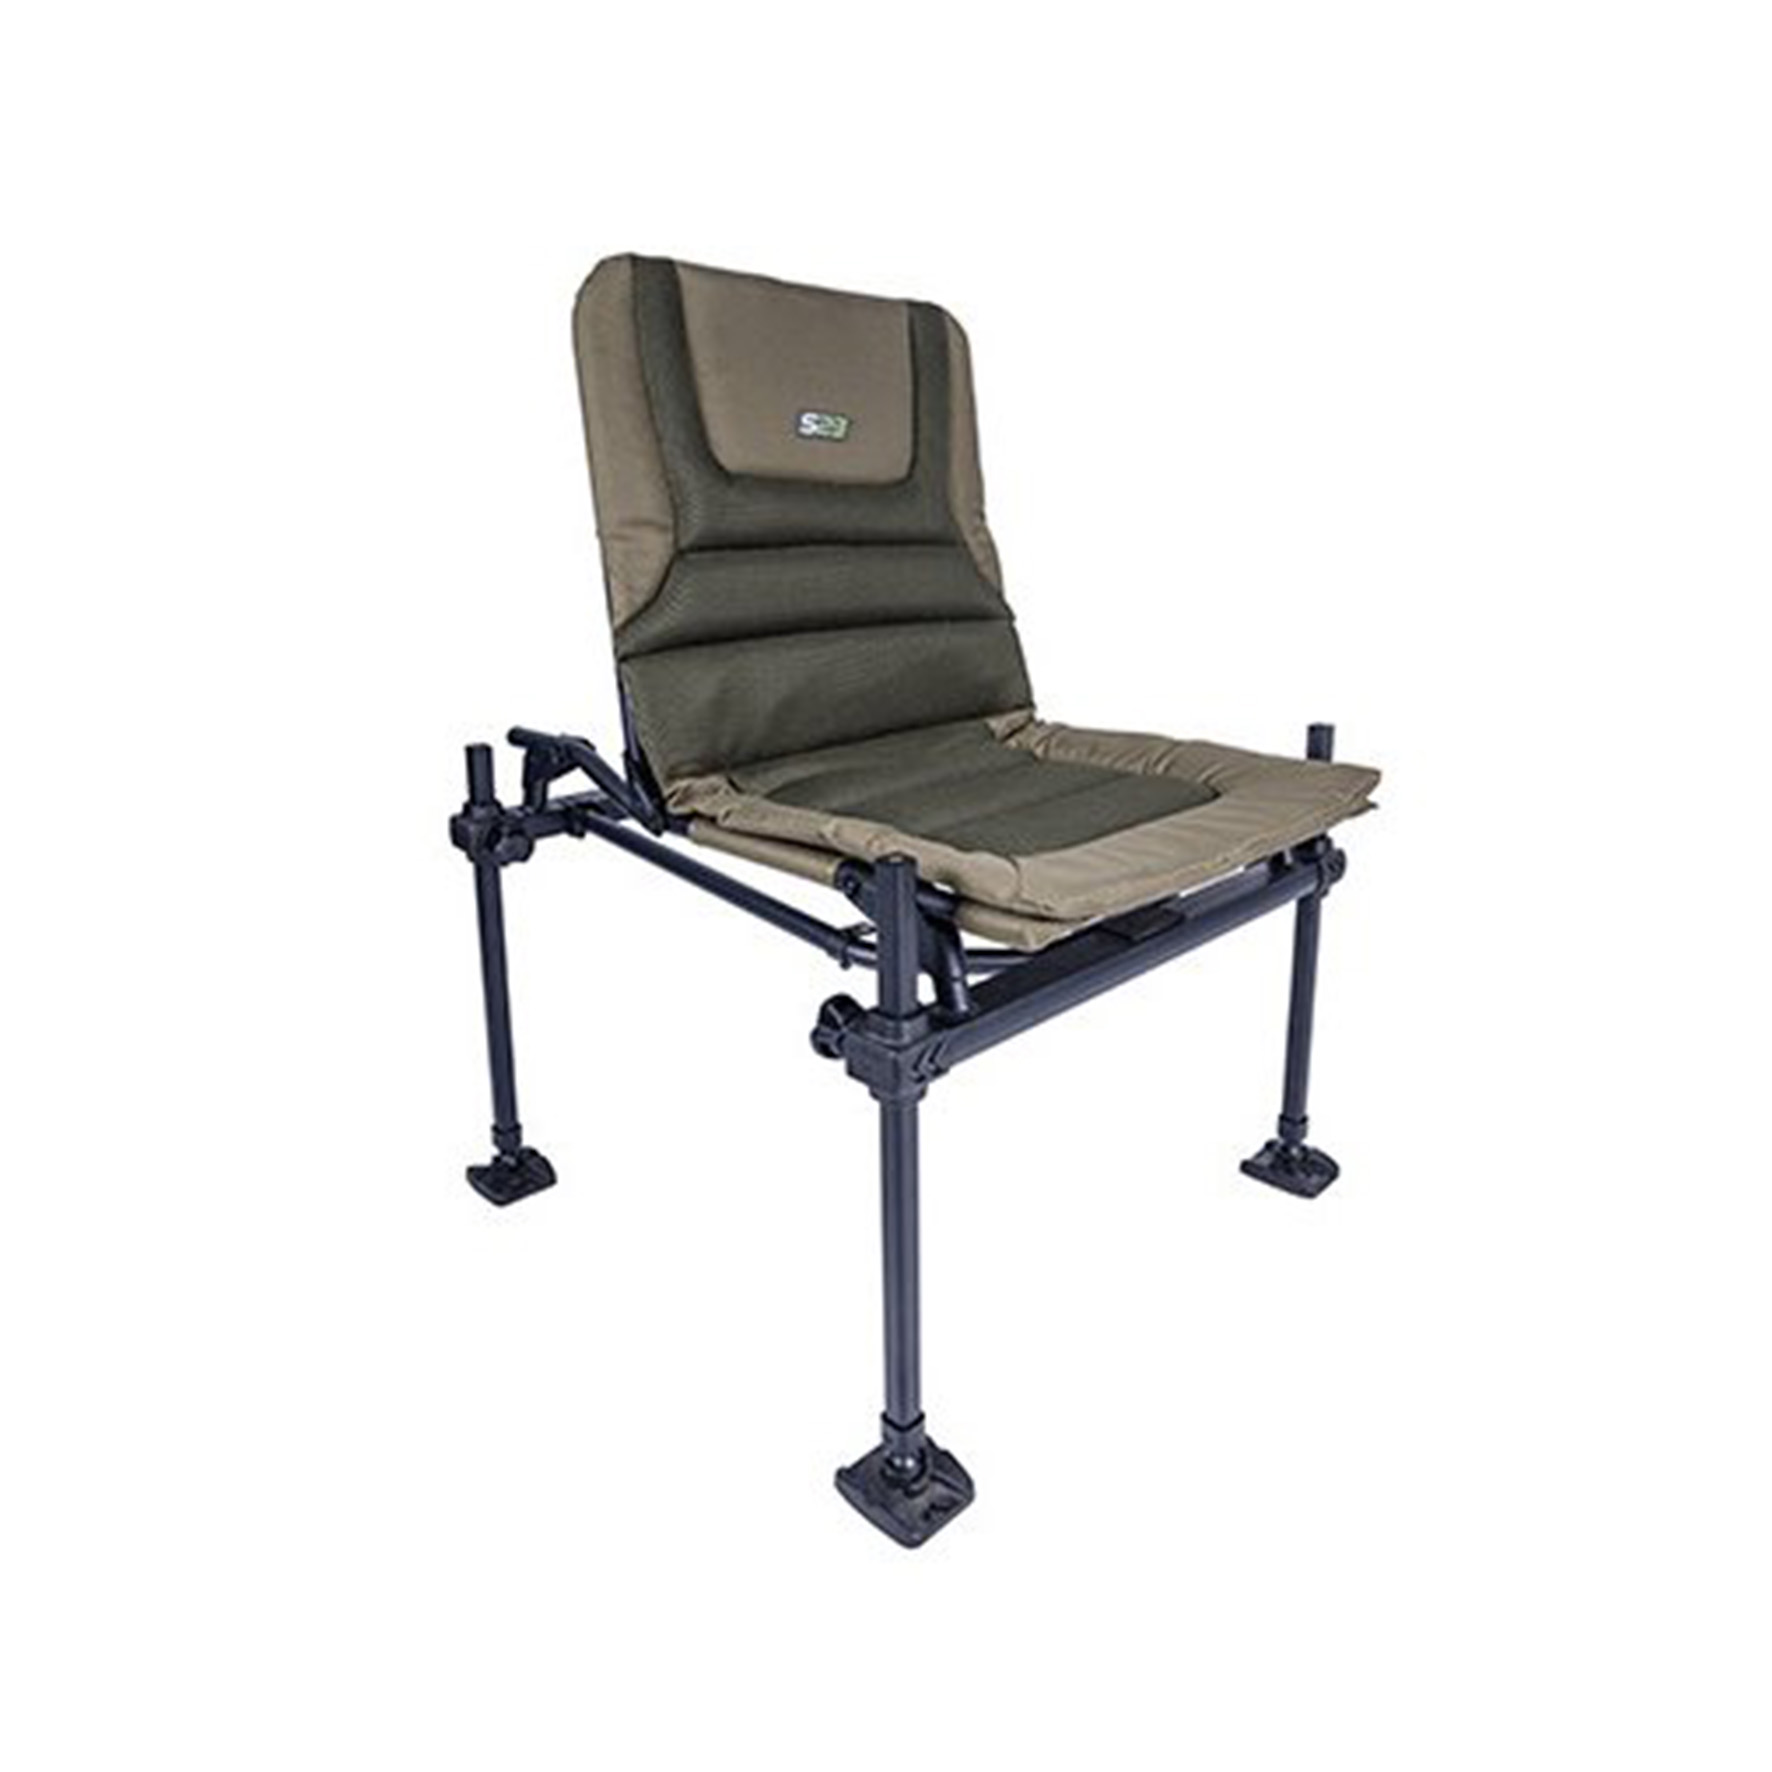 Korum Accessory Chair S23